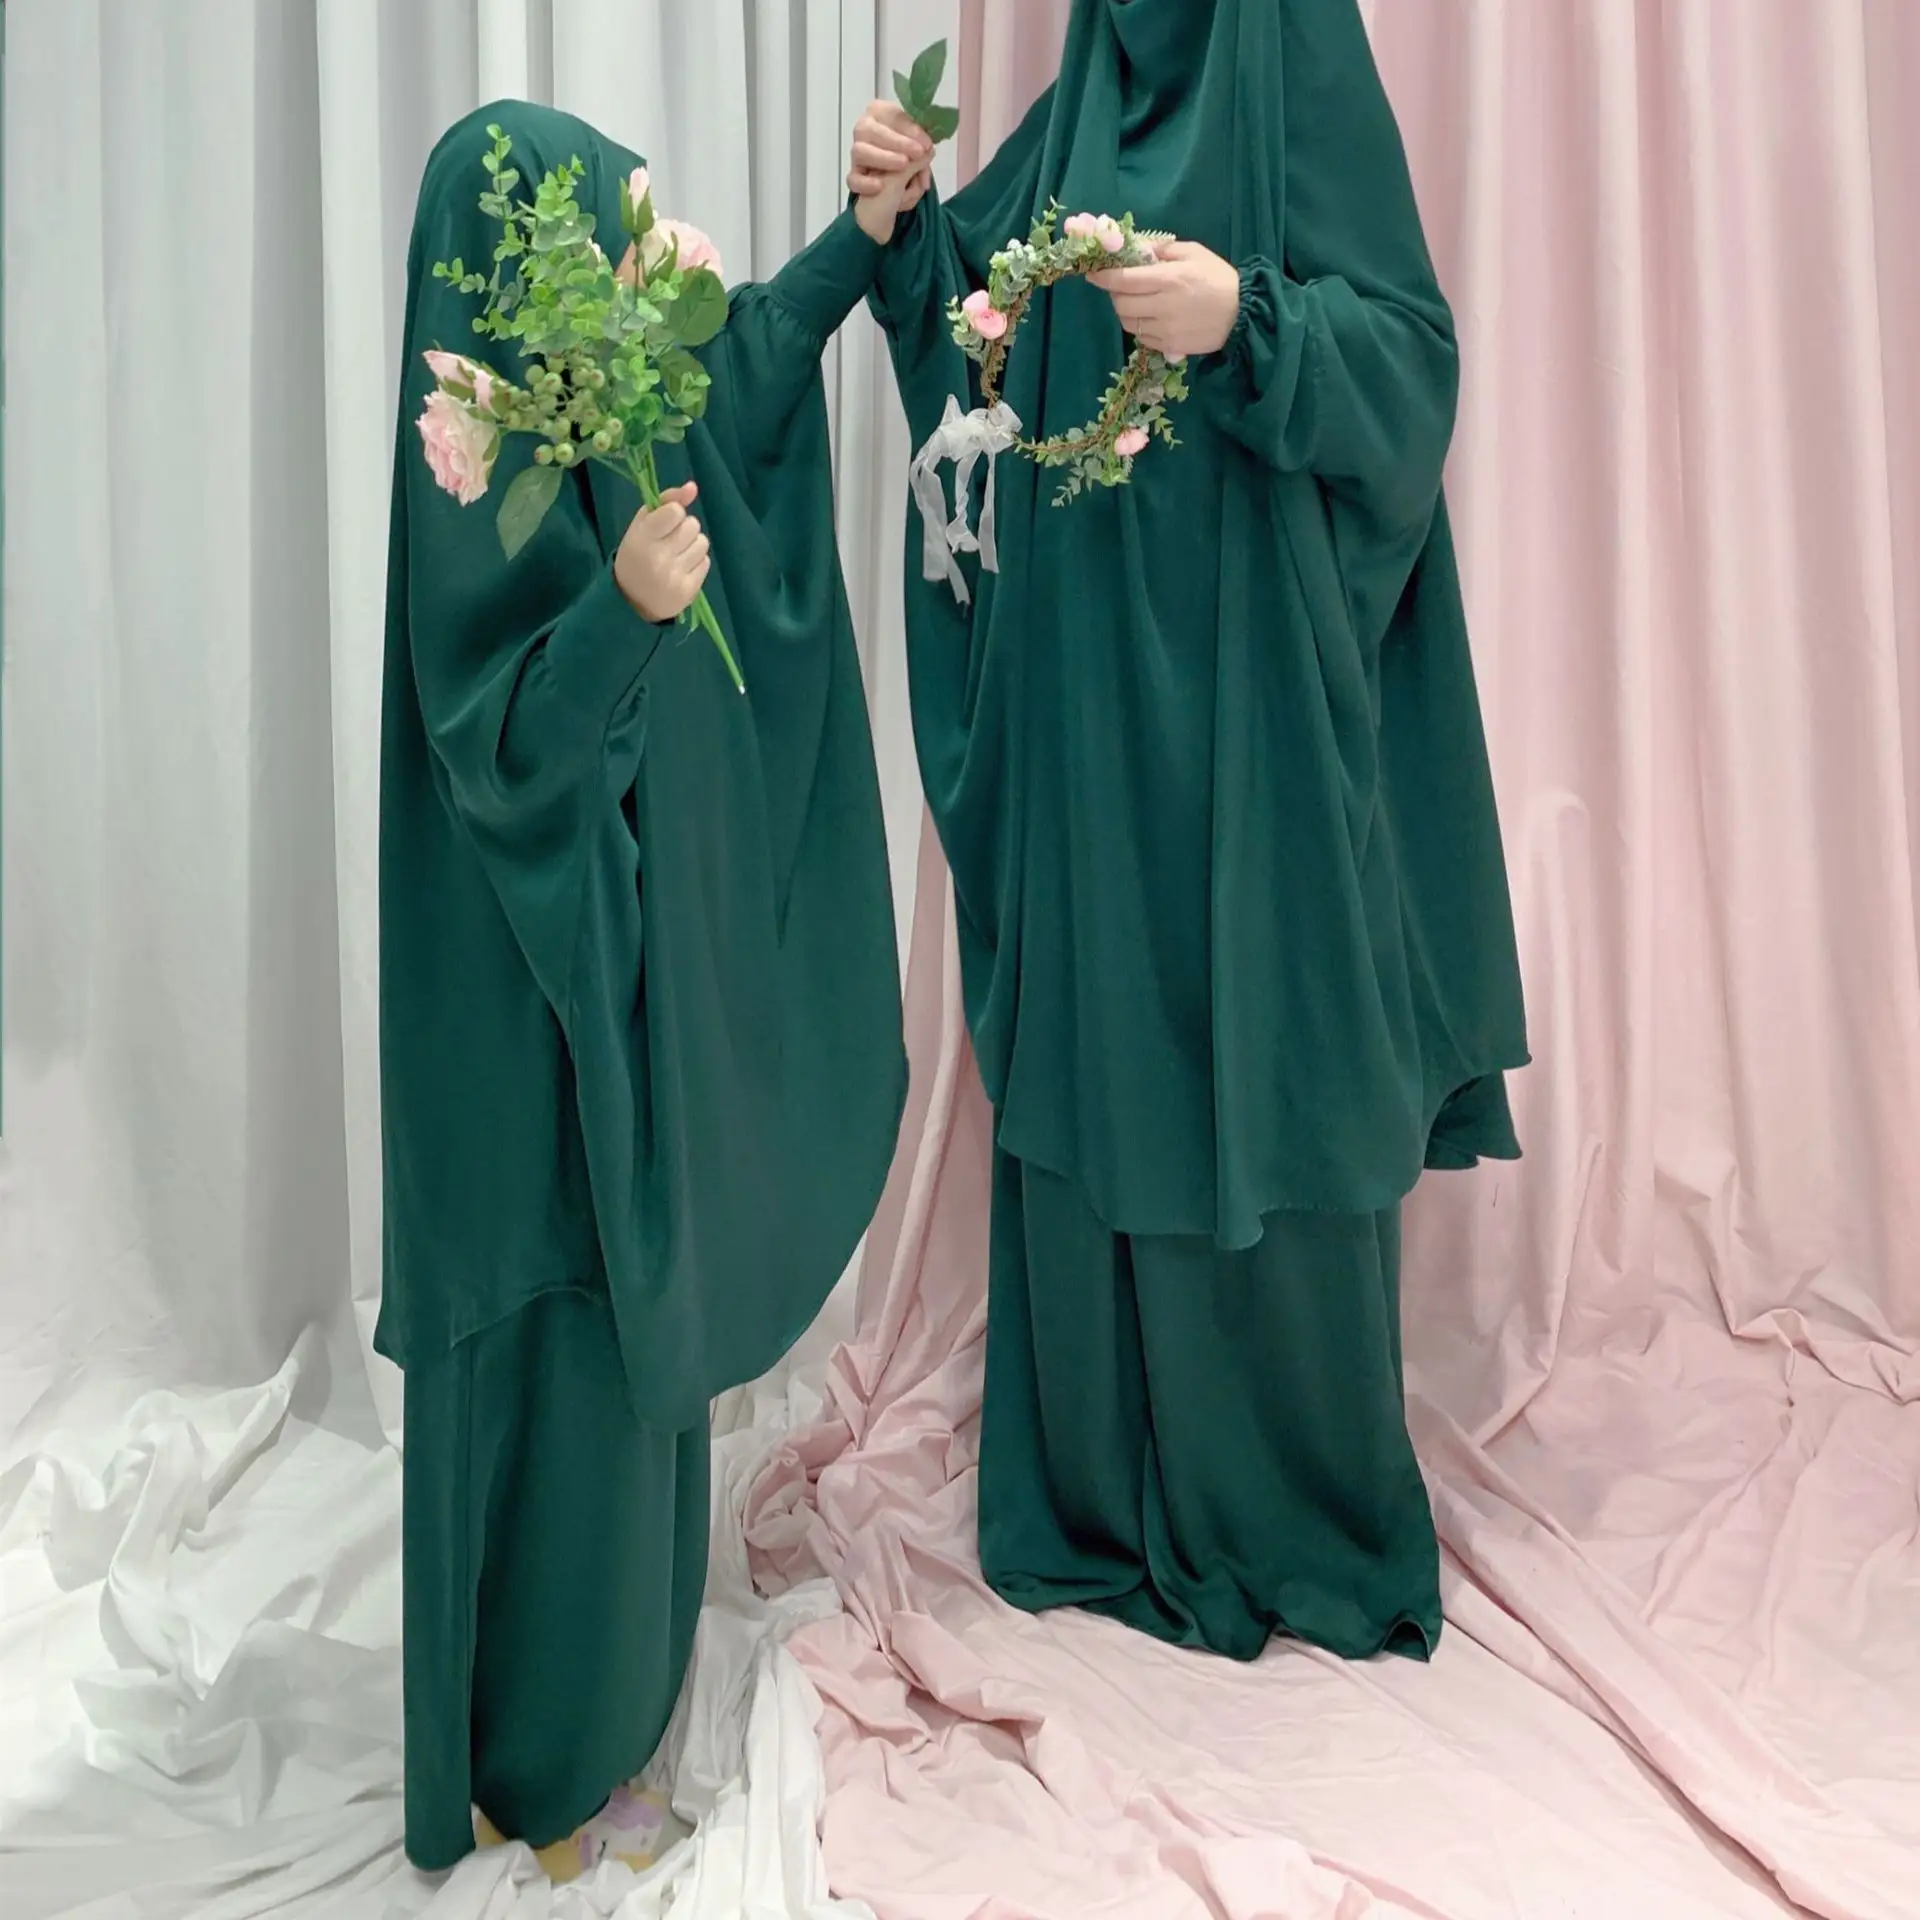 Groothandel Van Hoge Kwaliteit Ouder-Kind Wear Franse Jilbab Abaya Moslim Satijnen Zijden Gebedsjurk Jilbab Set Tweedelige Vrouwen Guangzhou